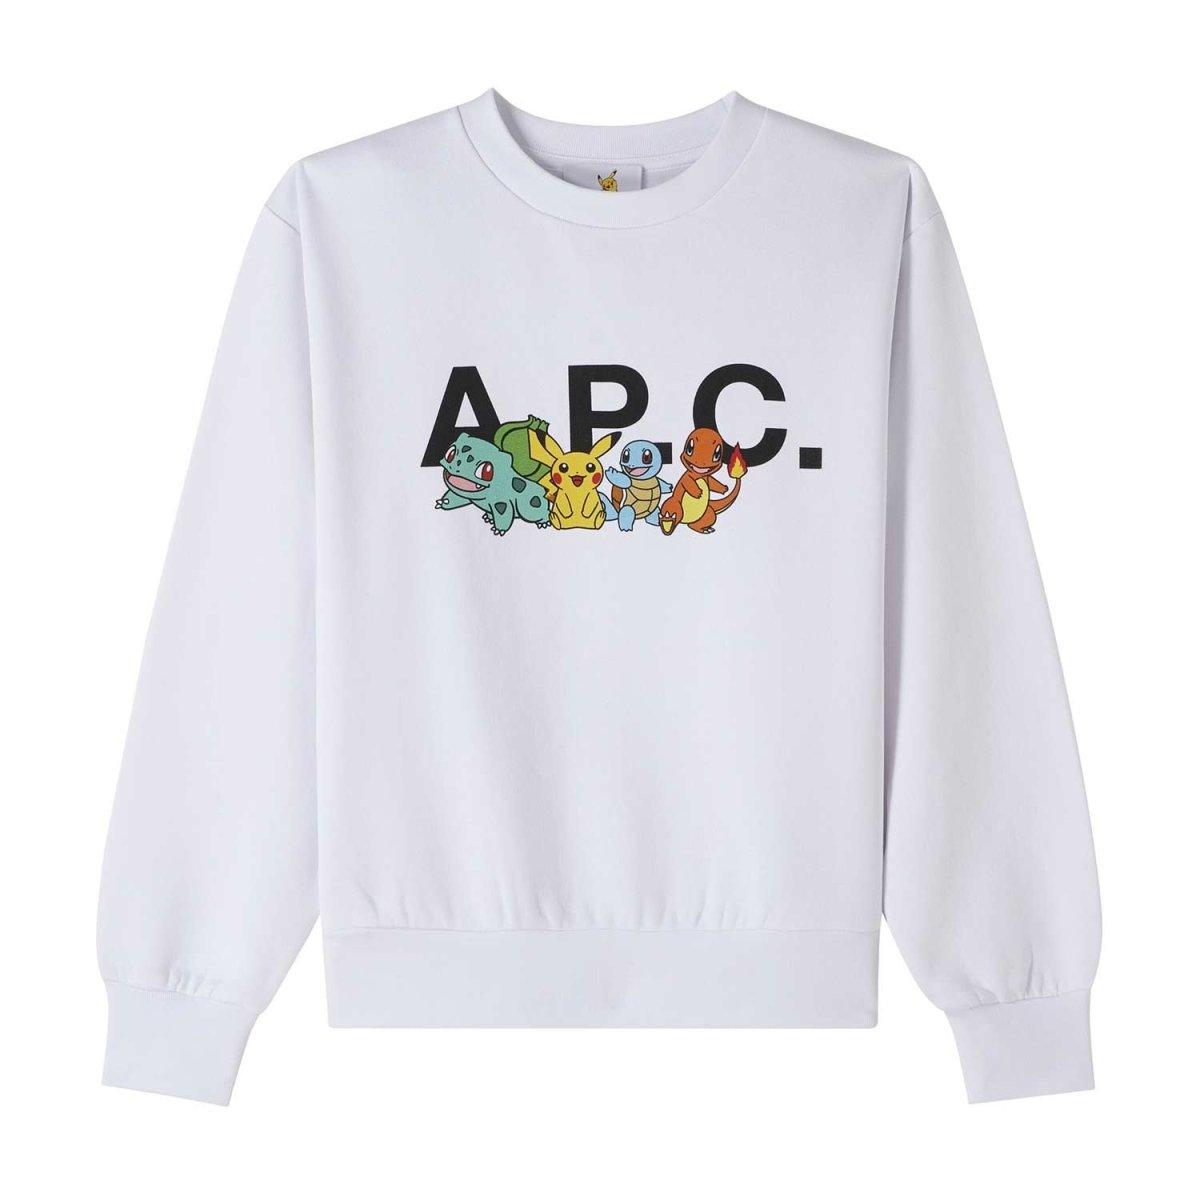 Pokémon × A.P.C.: White The Crew Sweatshirt - Women